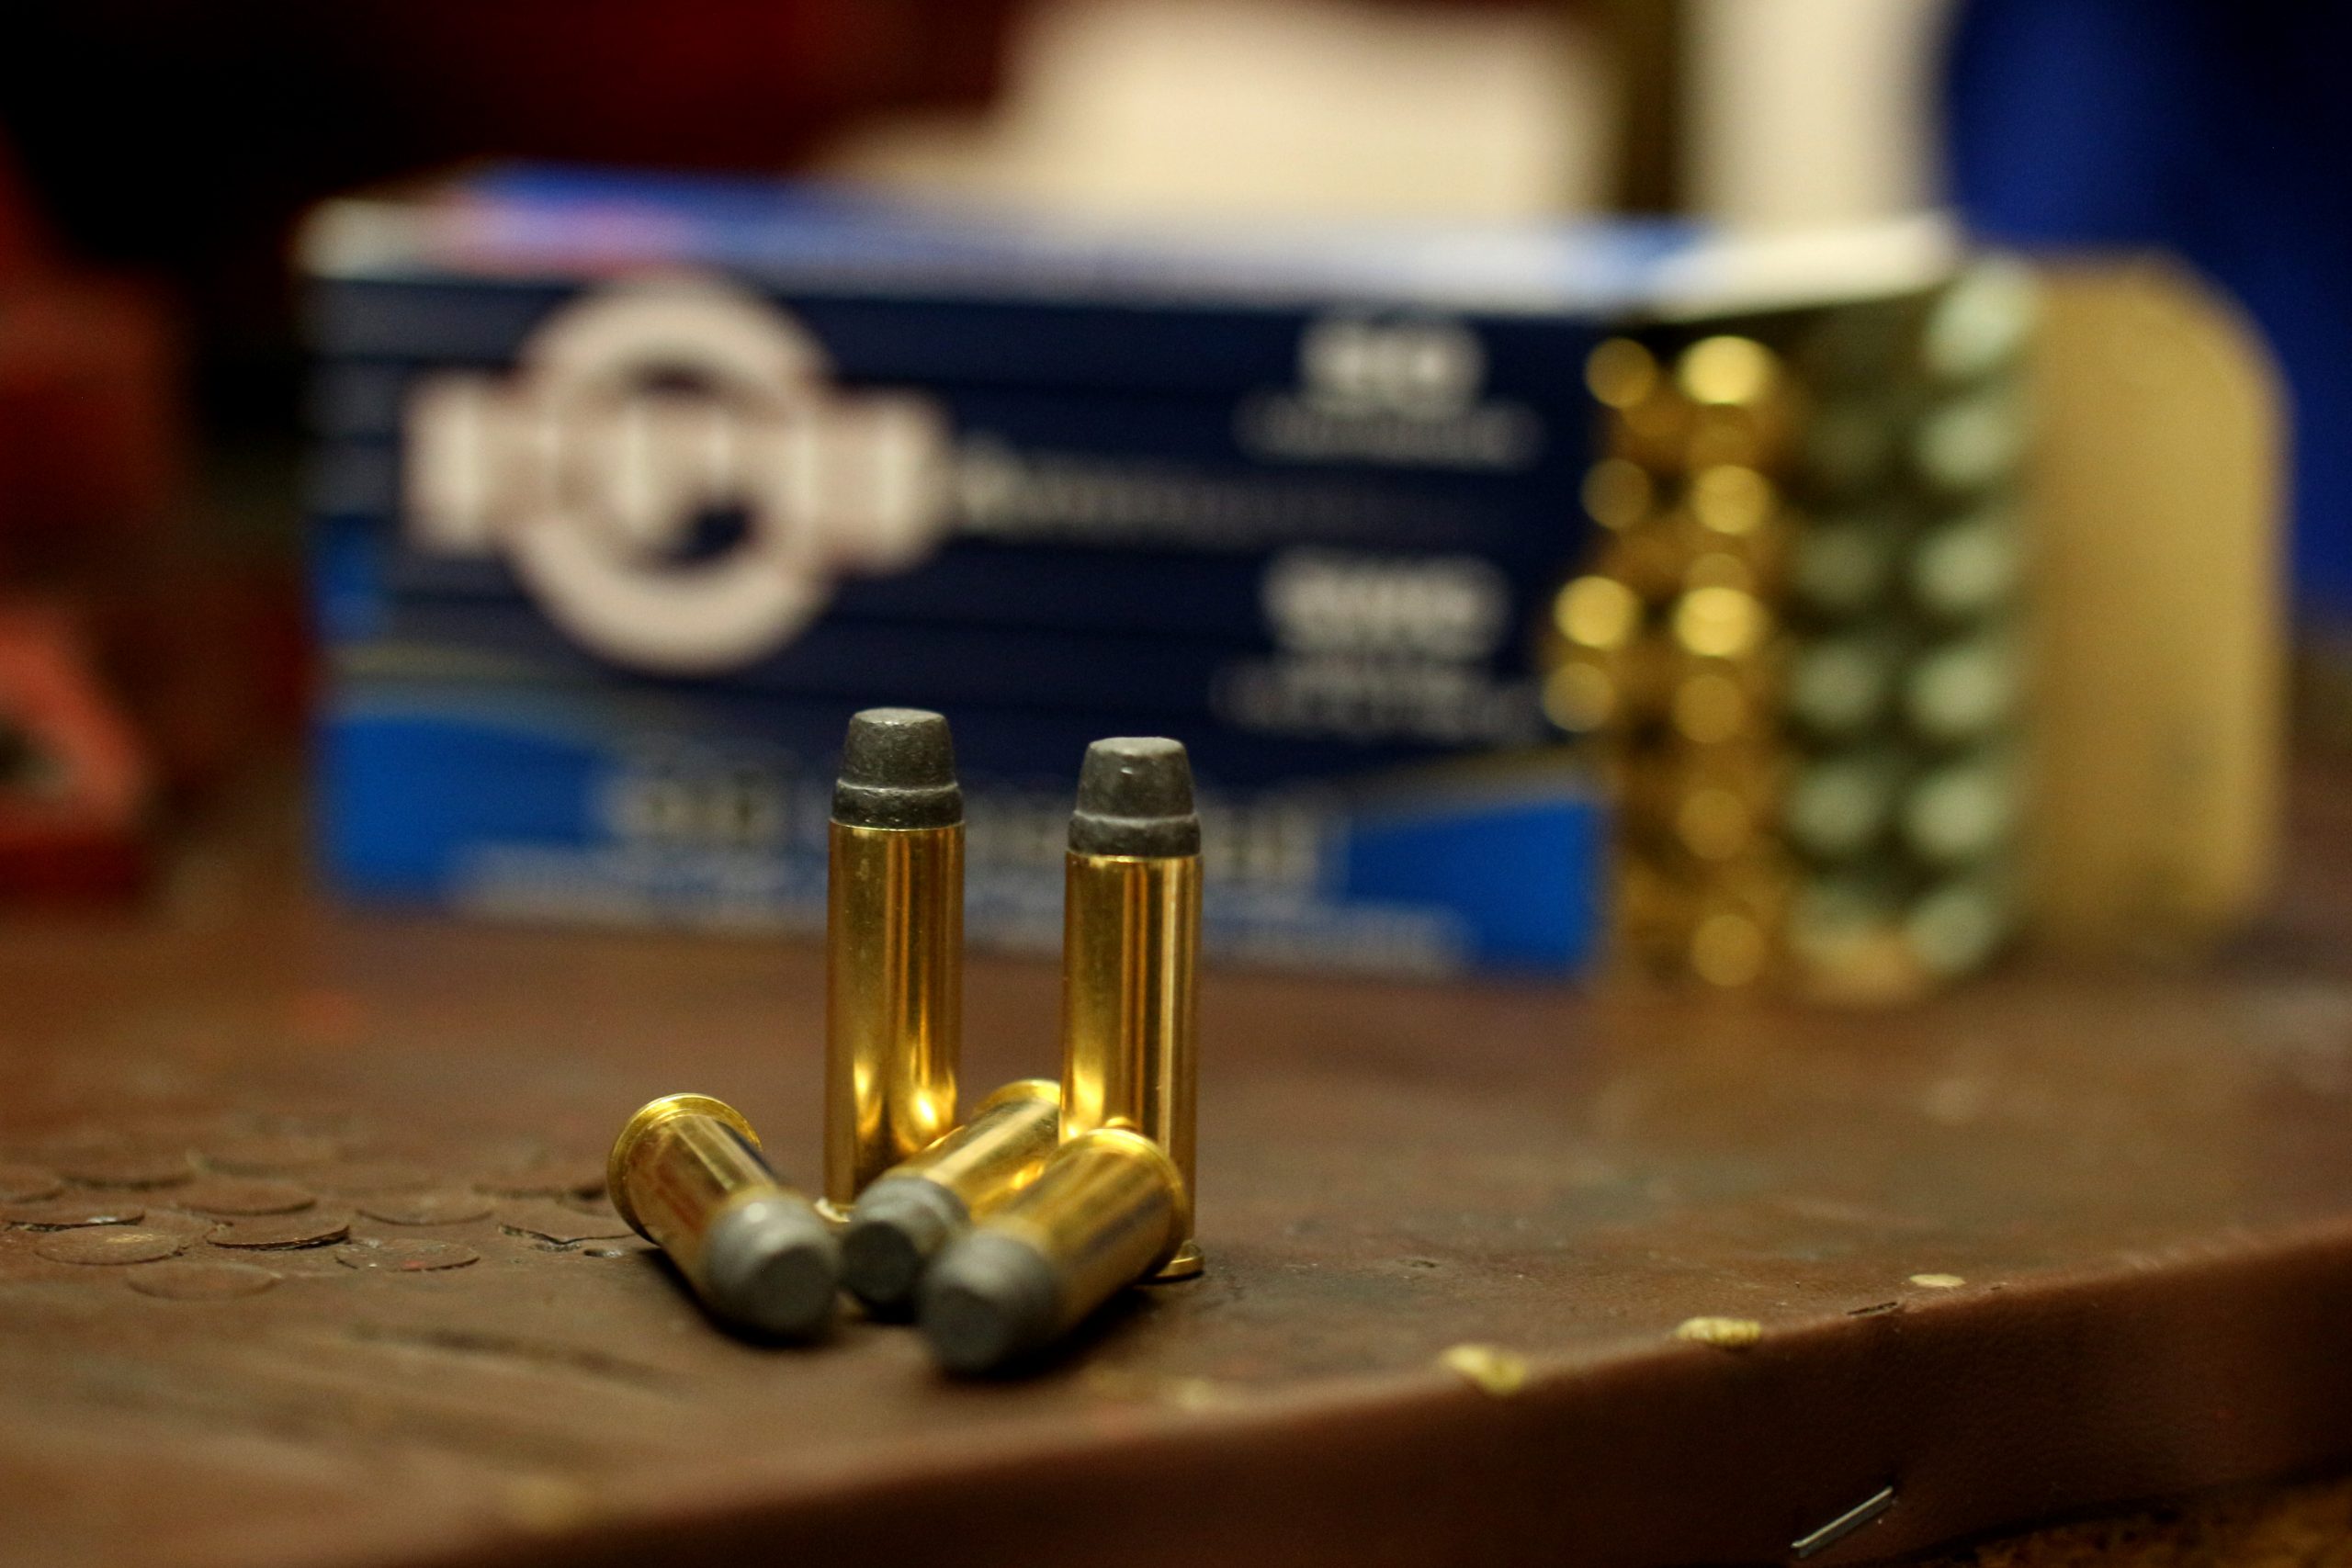 PPU .38 Special 158gr SWC ammunition